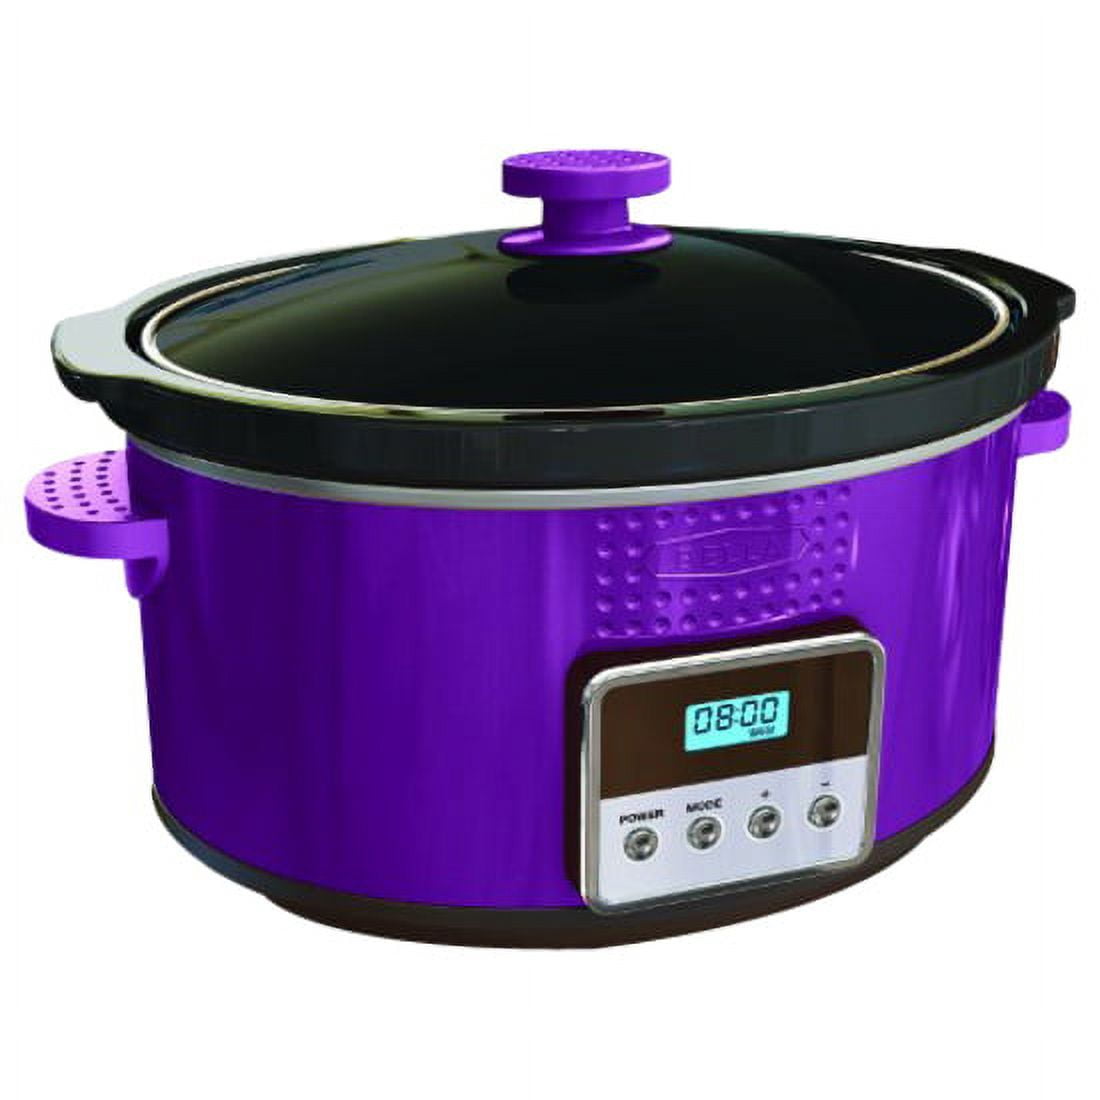 Crock-Pot 2.5-Quart Manual Slow Cooker, Purple SCR250P-MJ $14.99